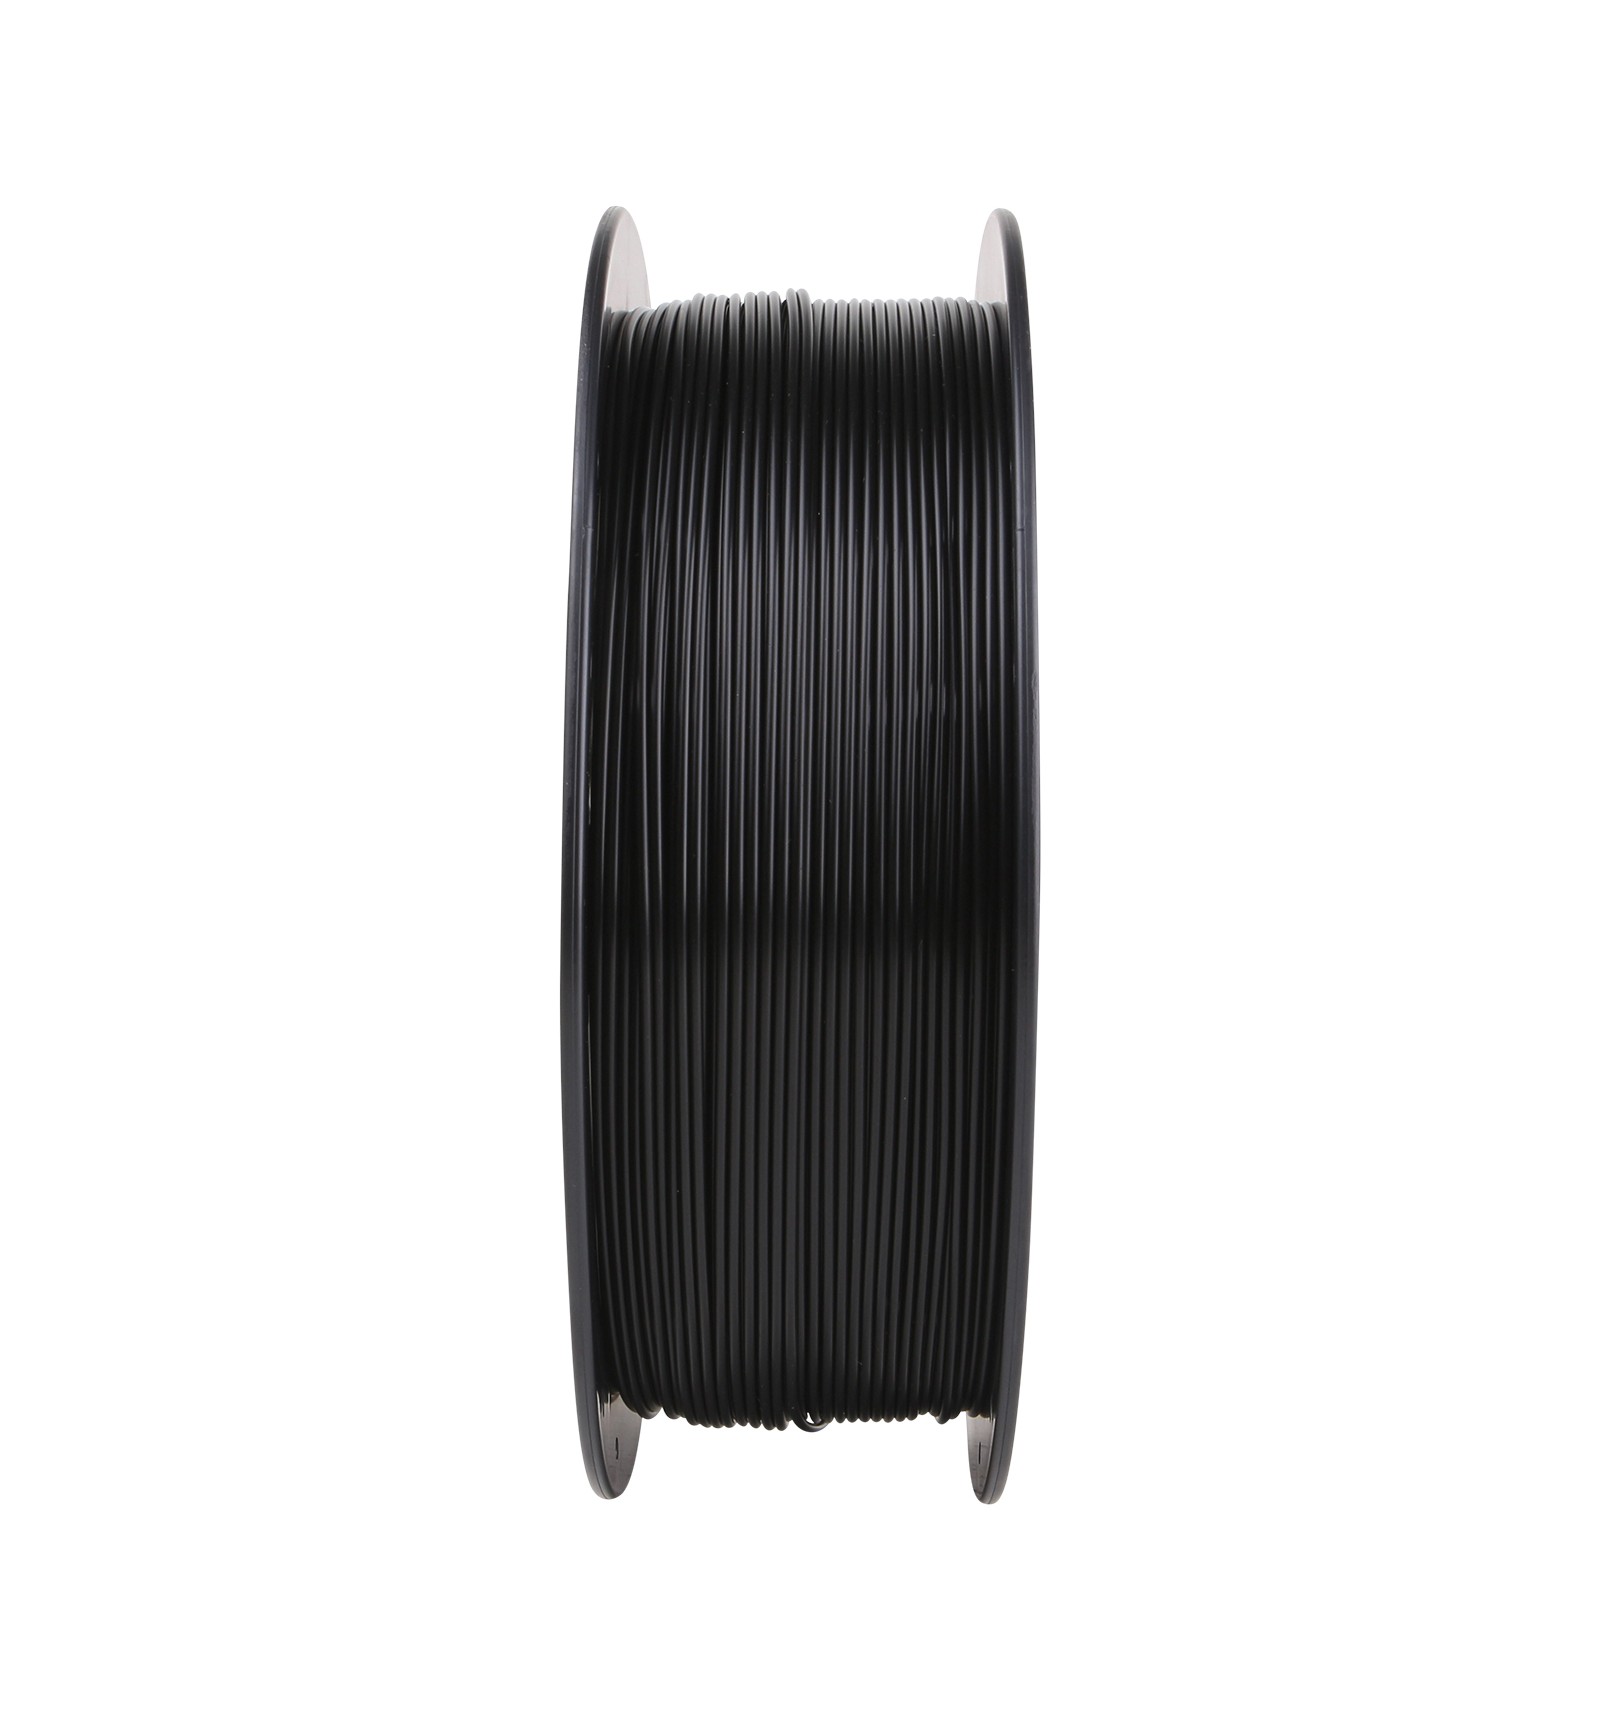 SunLu PLA+ Filament | 1.75mm Black 1kg – DIY Electronics